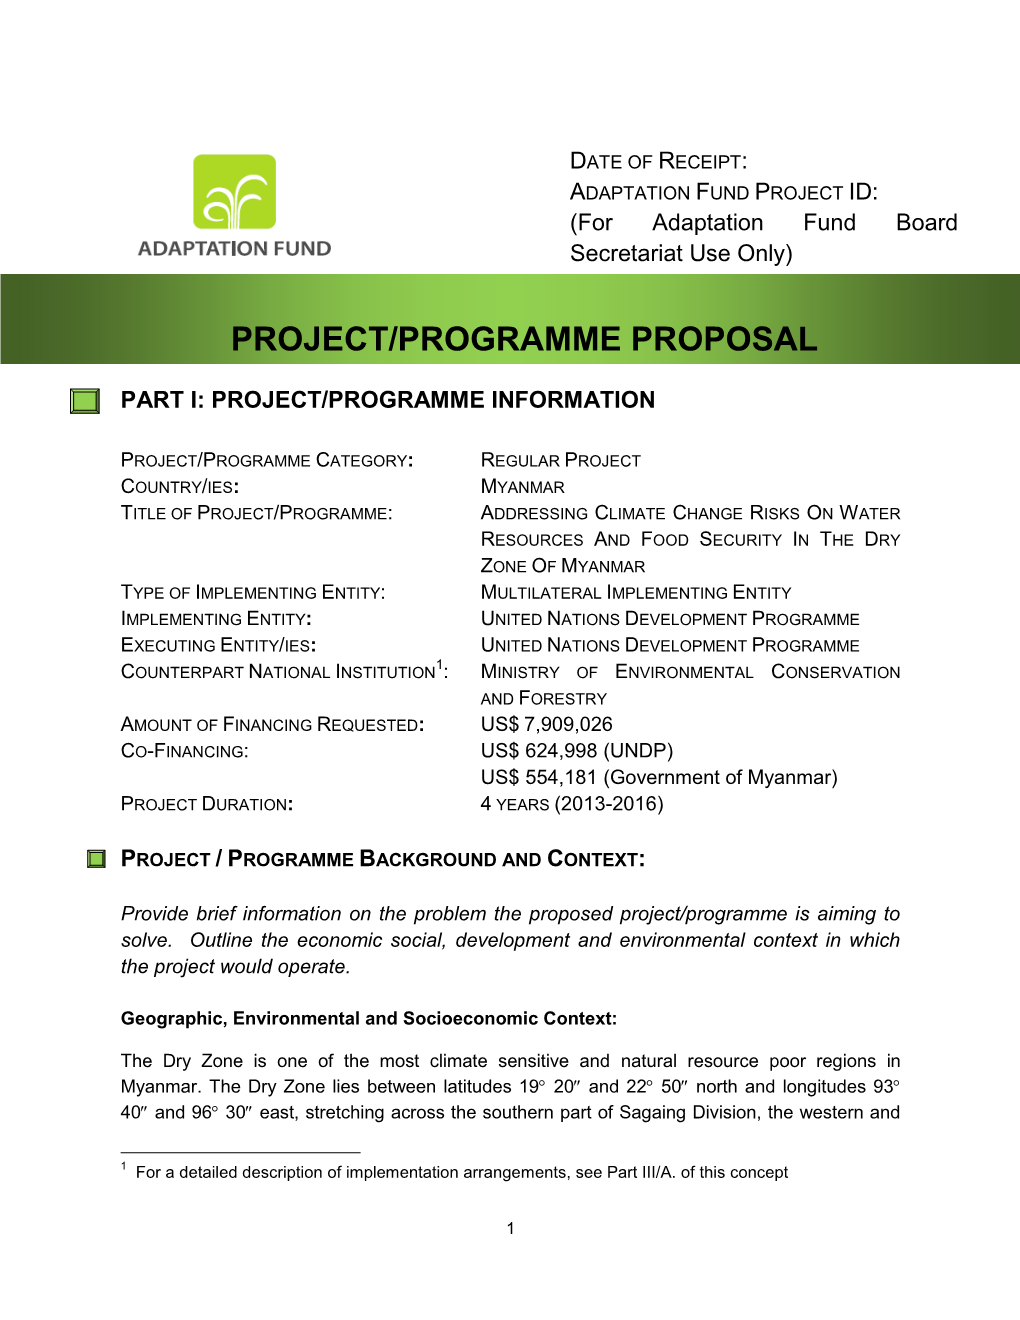 Project/Programme Proposal